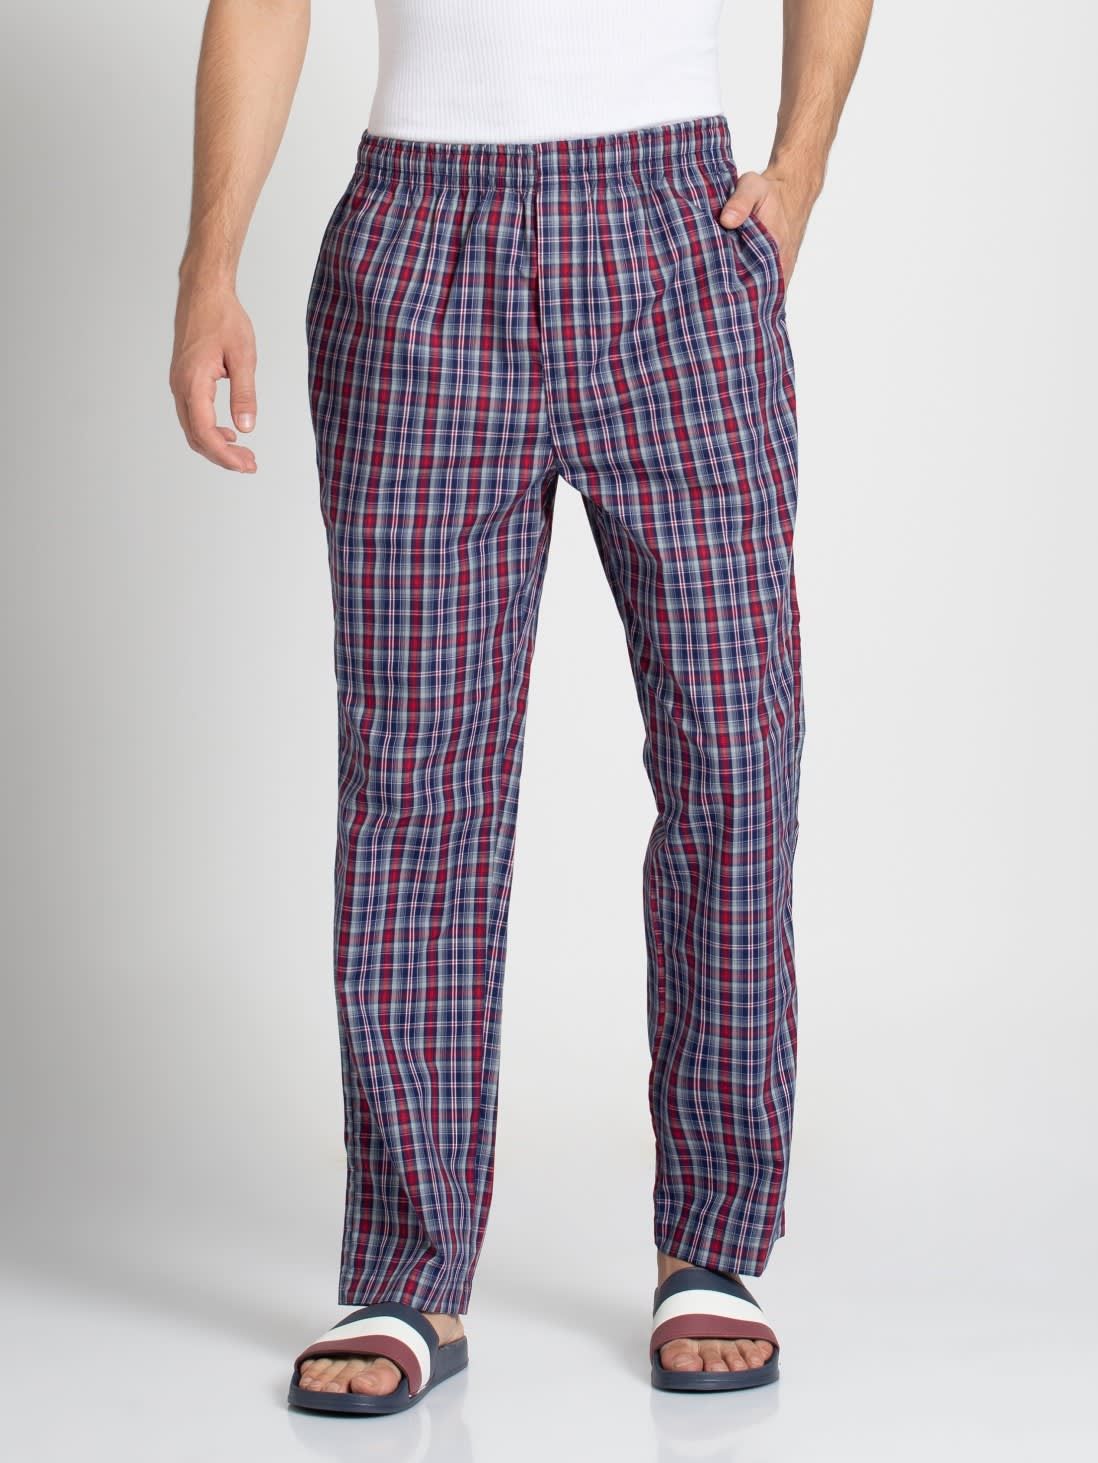 Amazon.com: Vulcanodon Men's Cotton Woven Pajama Pants, Soft Lounge Pajama  Pants with big pockets for Men Plaid Pj Bottoms(Aqua Blue Plaid,S) :  Clothing, Shoes & Jewelry